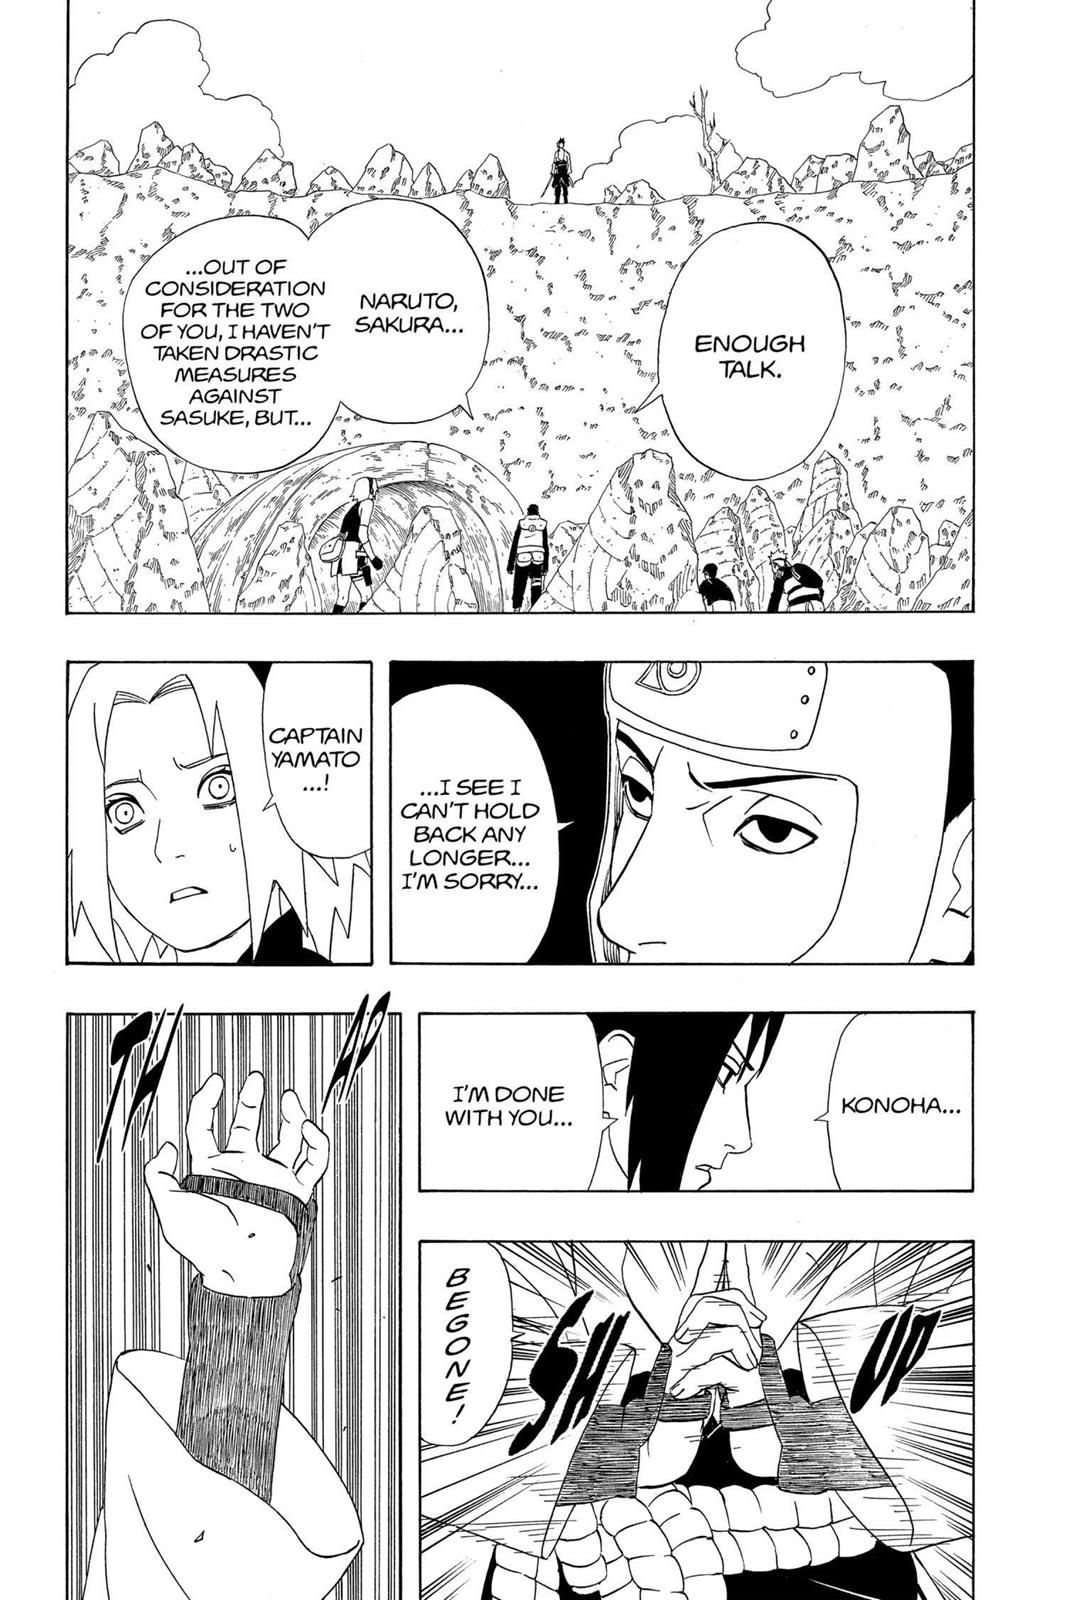 Sasuke MS vs Sakura adulta. - Página 5 0309-012